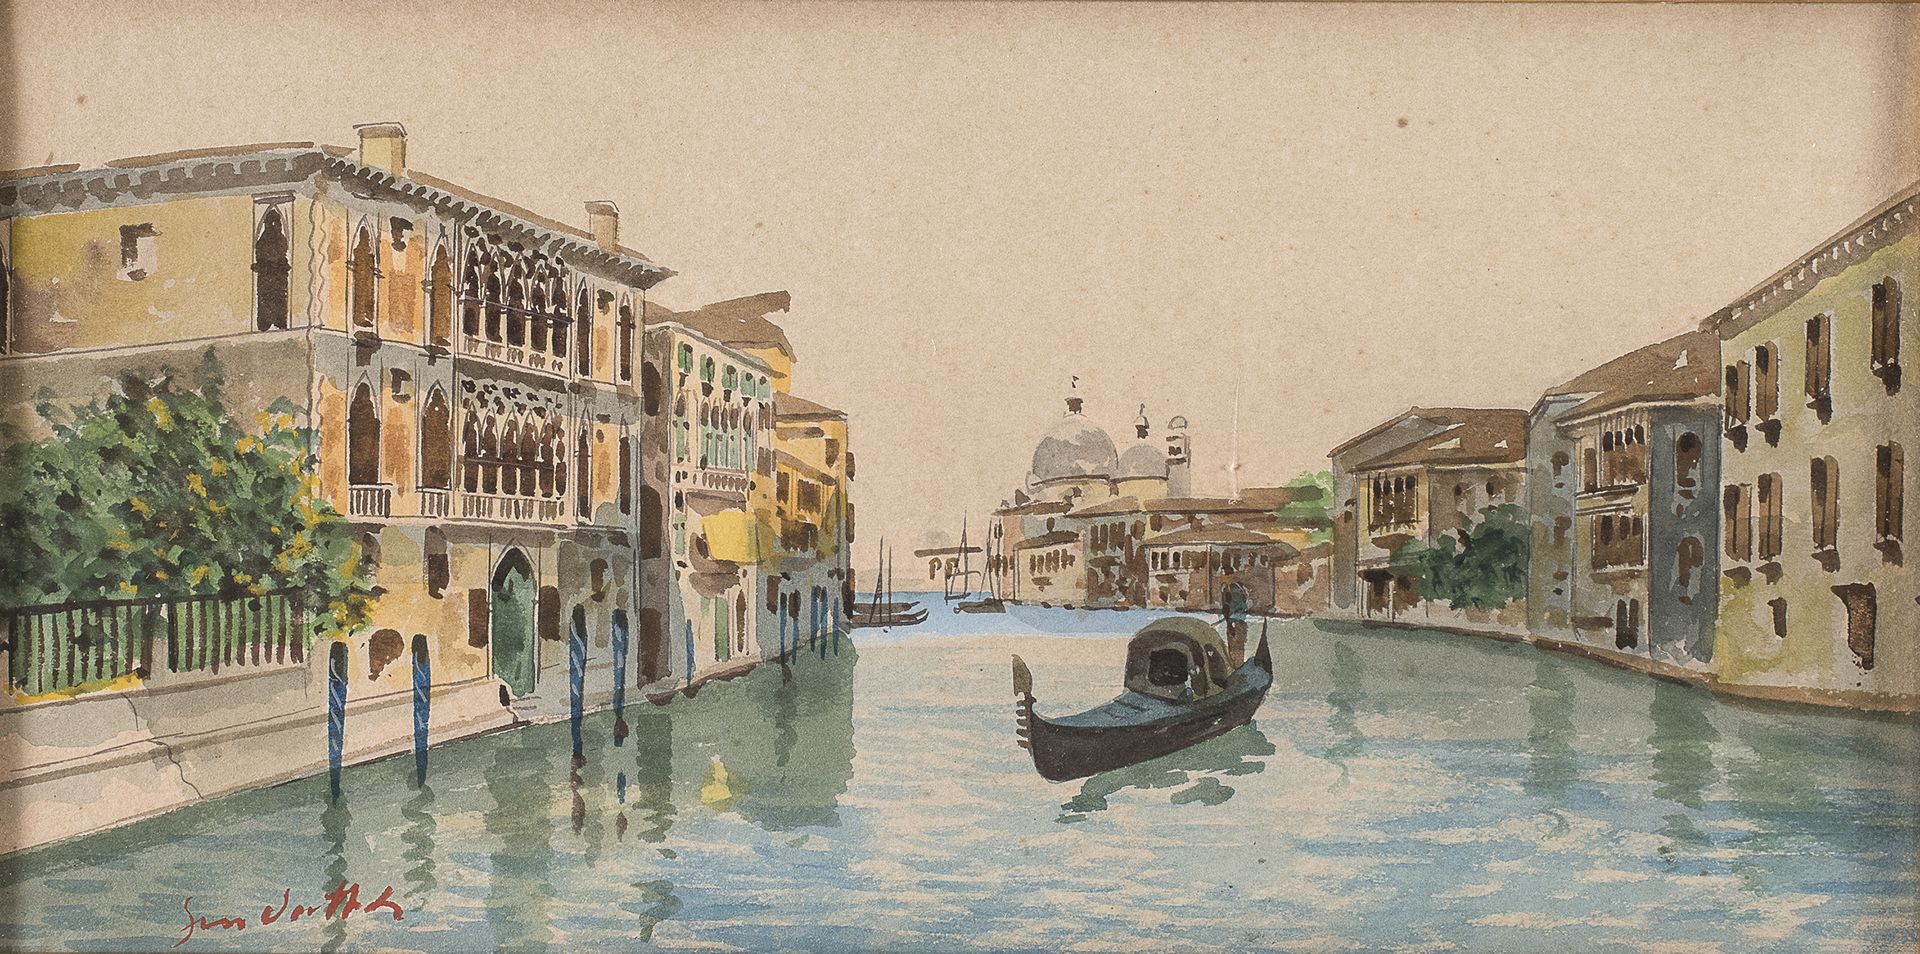 Null 20世纪画家



大运河上的卡瓦利-弗朗谢蒂宫景观

纸上水彩画，cm. 17 x 31

左下角有签名

镀金框架